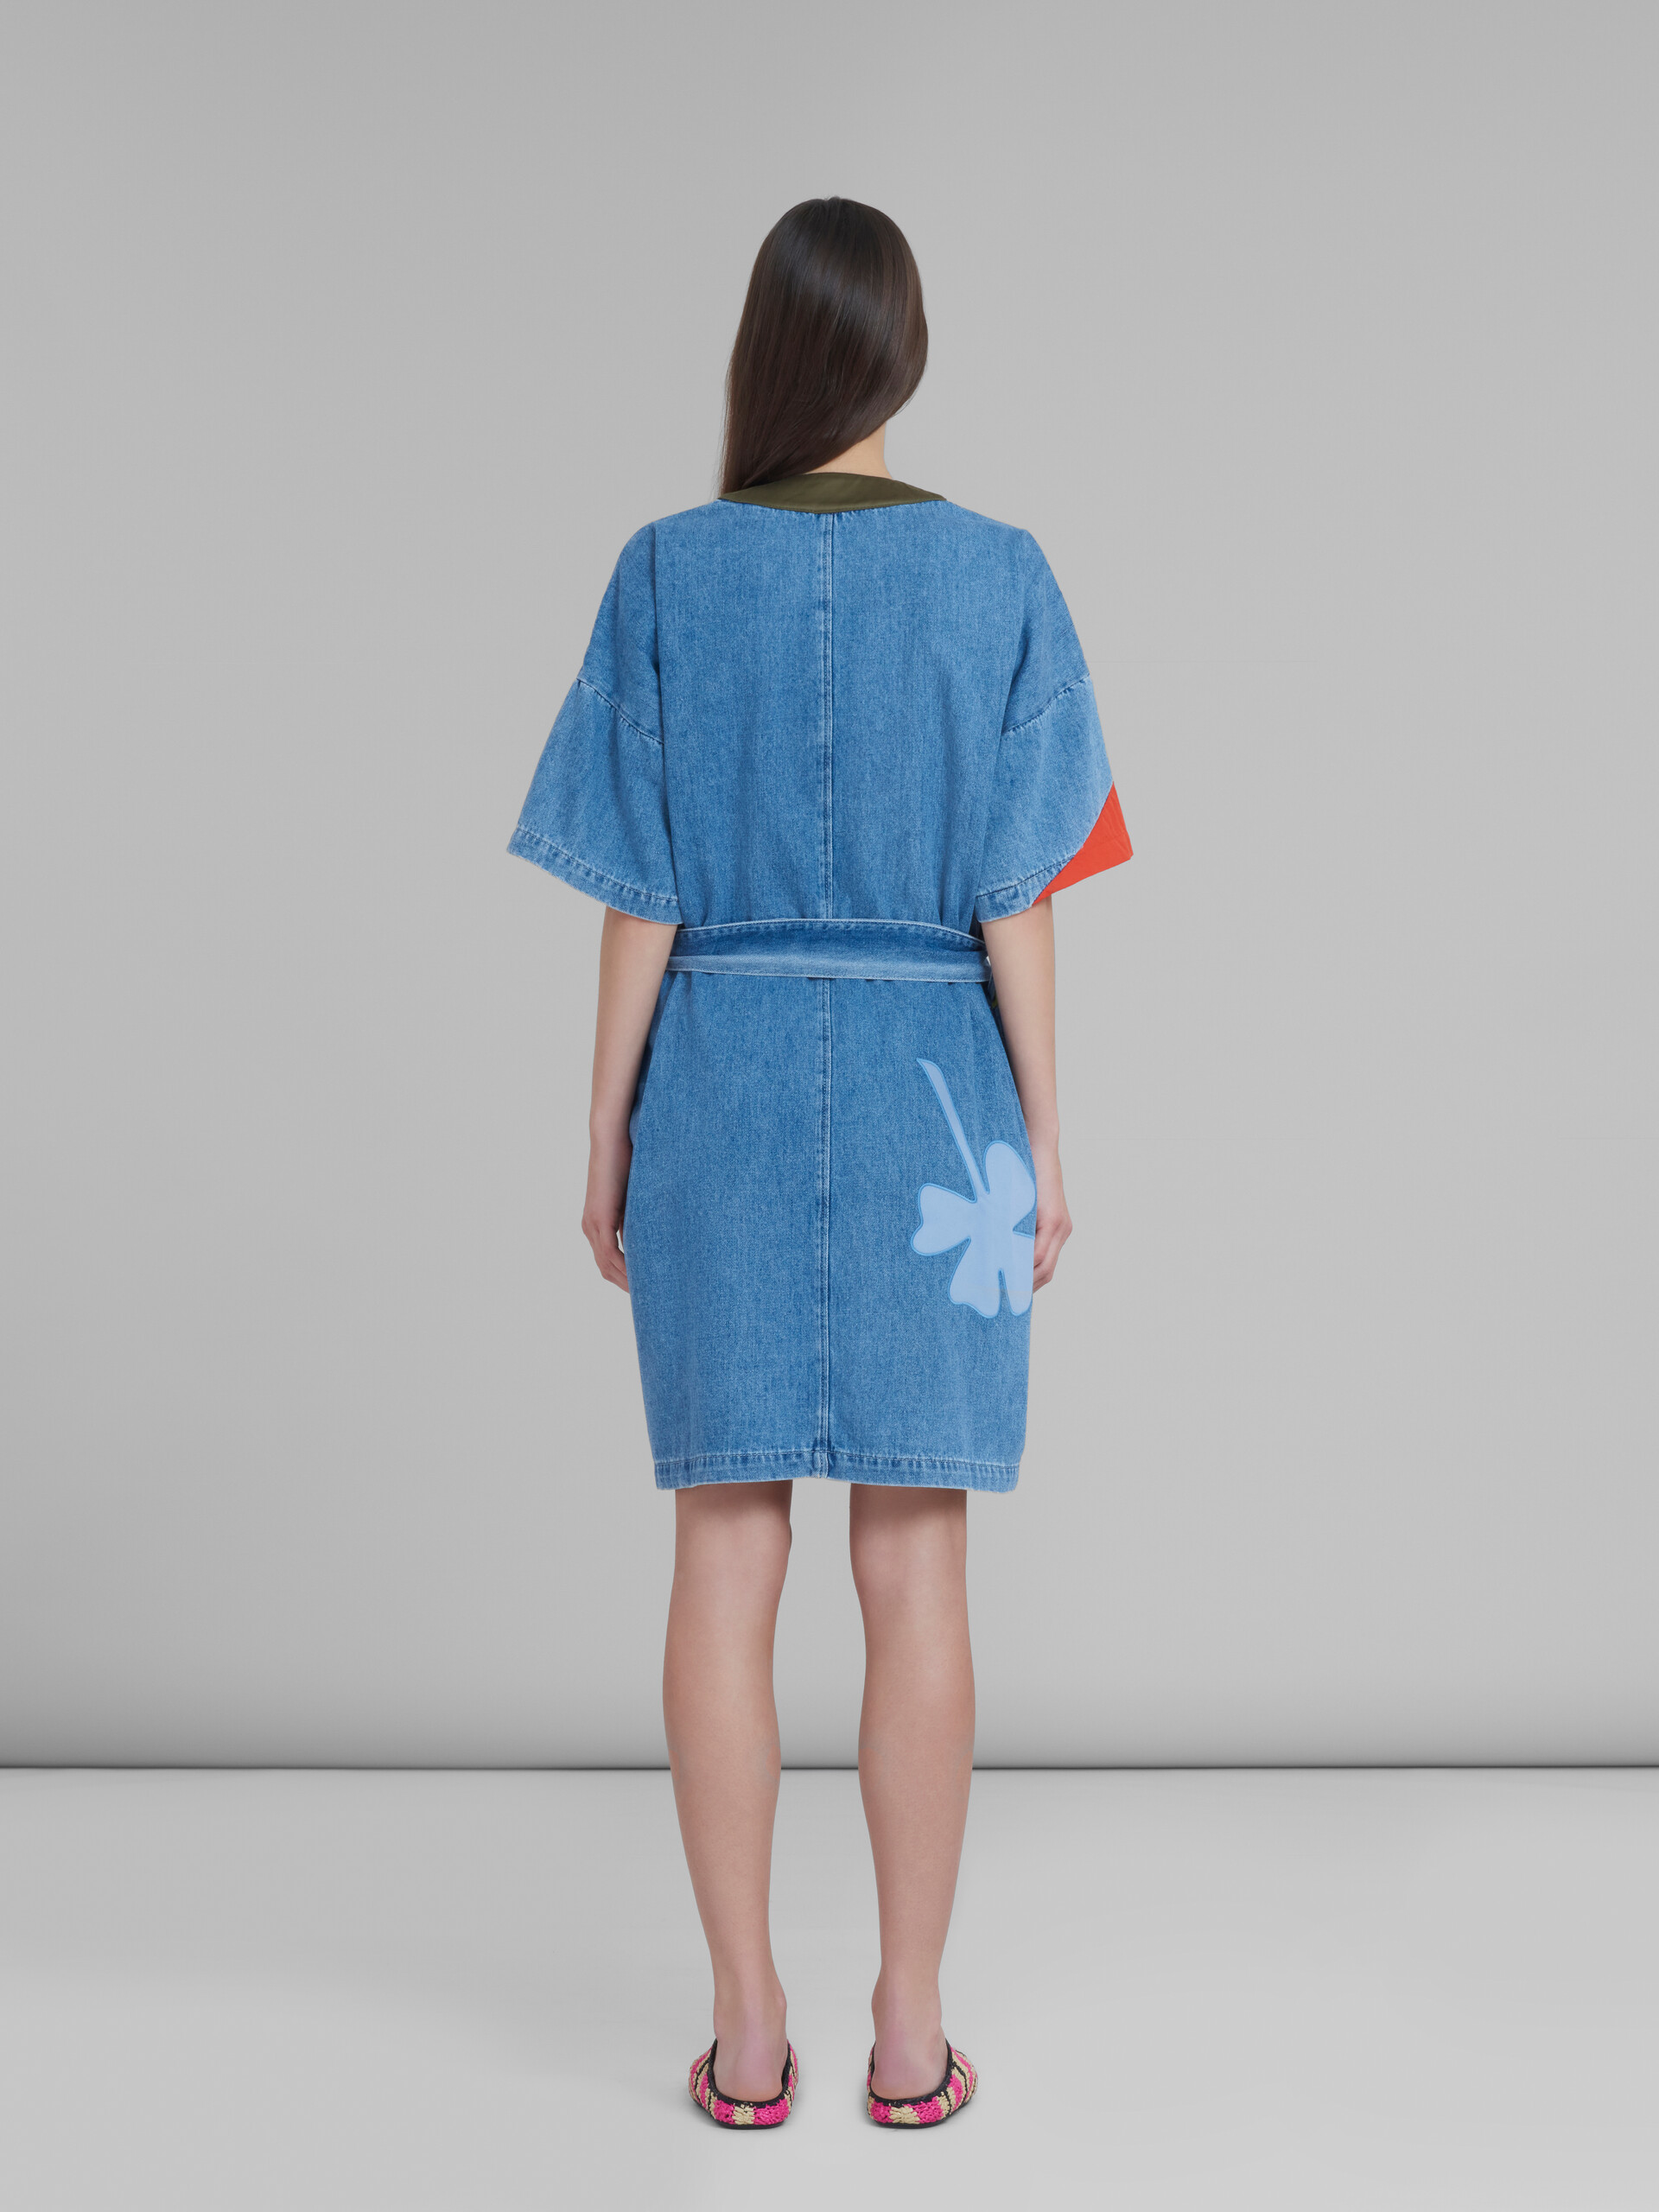 Marni x No Vacancy Inn - Blue chambray light coat with embroidery - Coat - Image 3